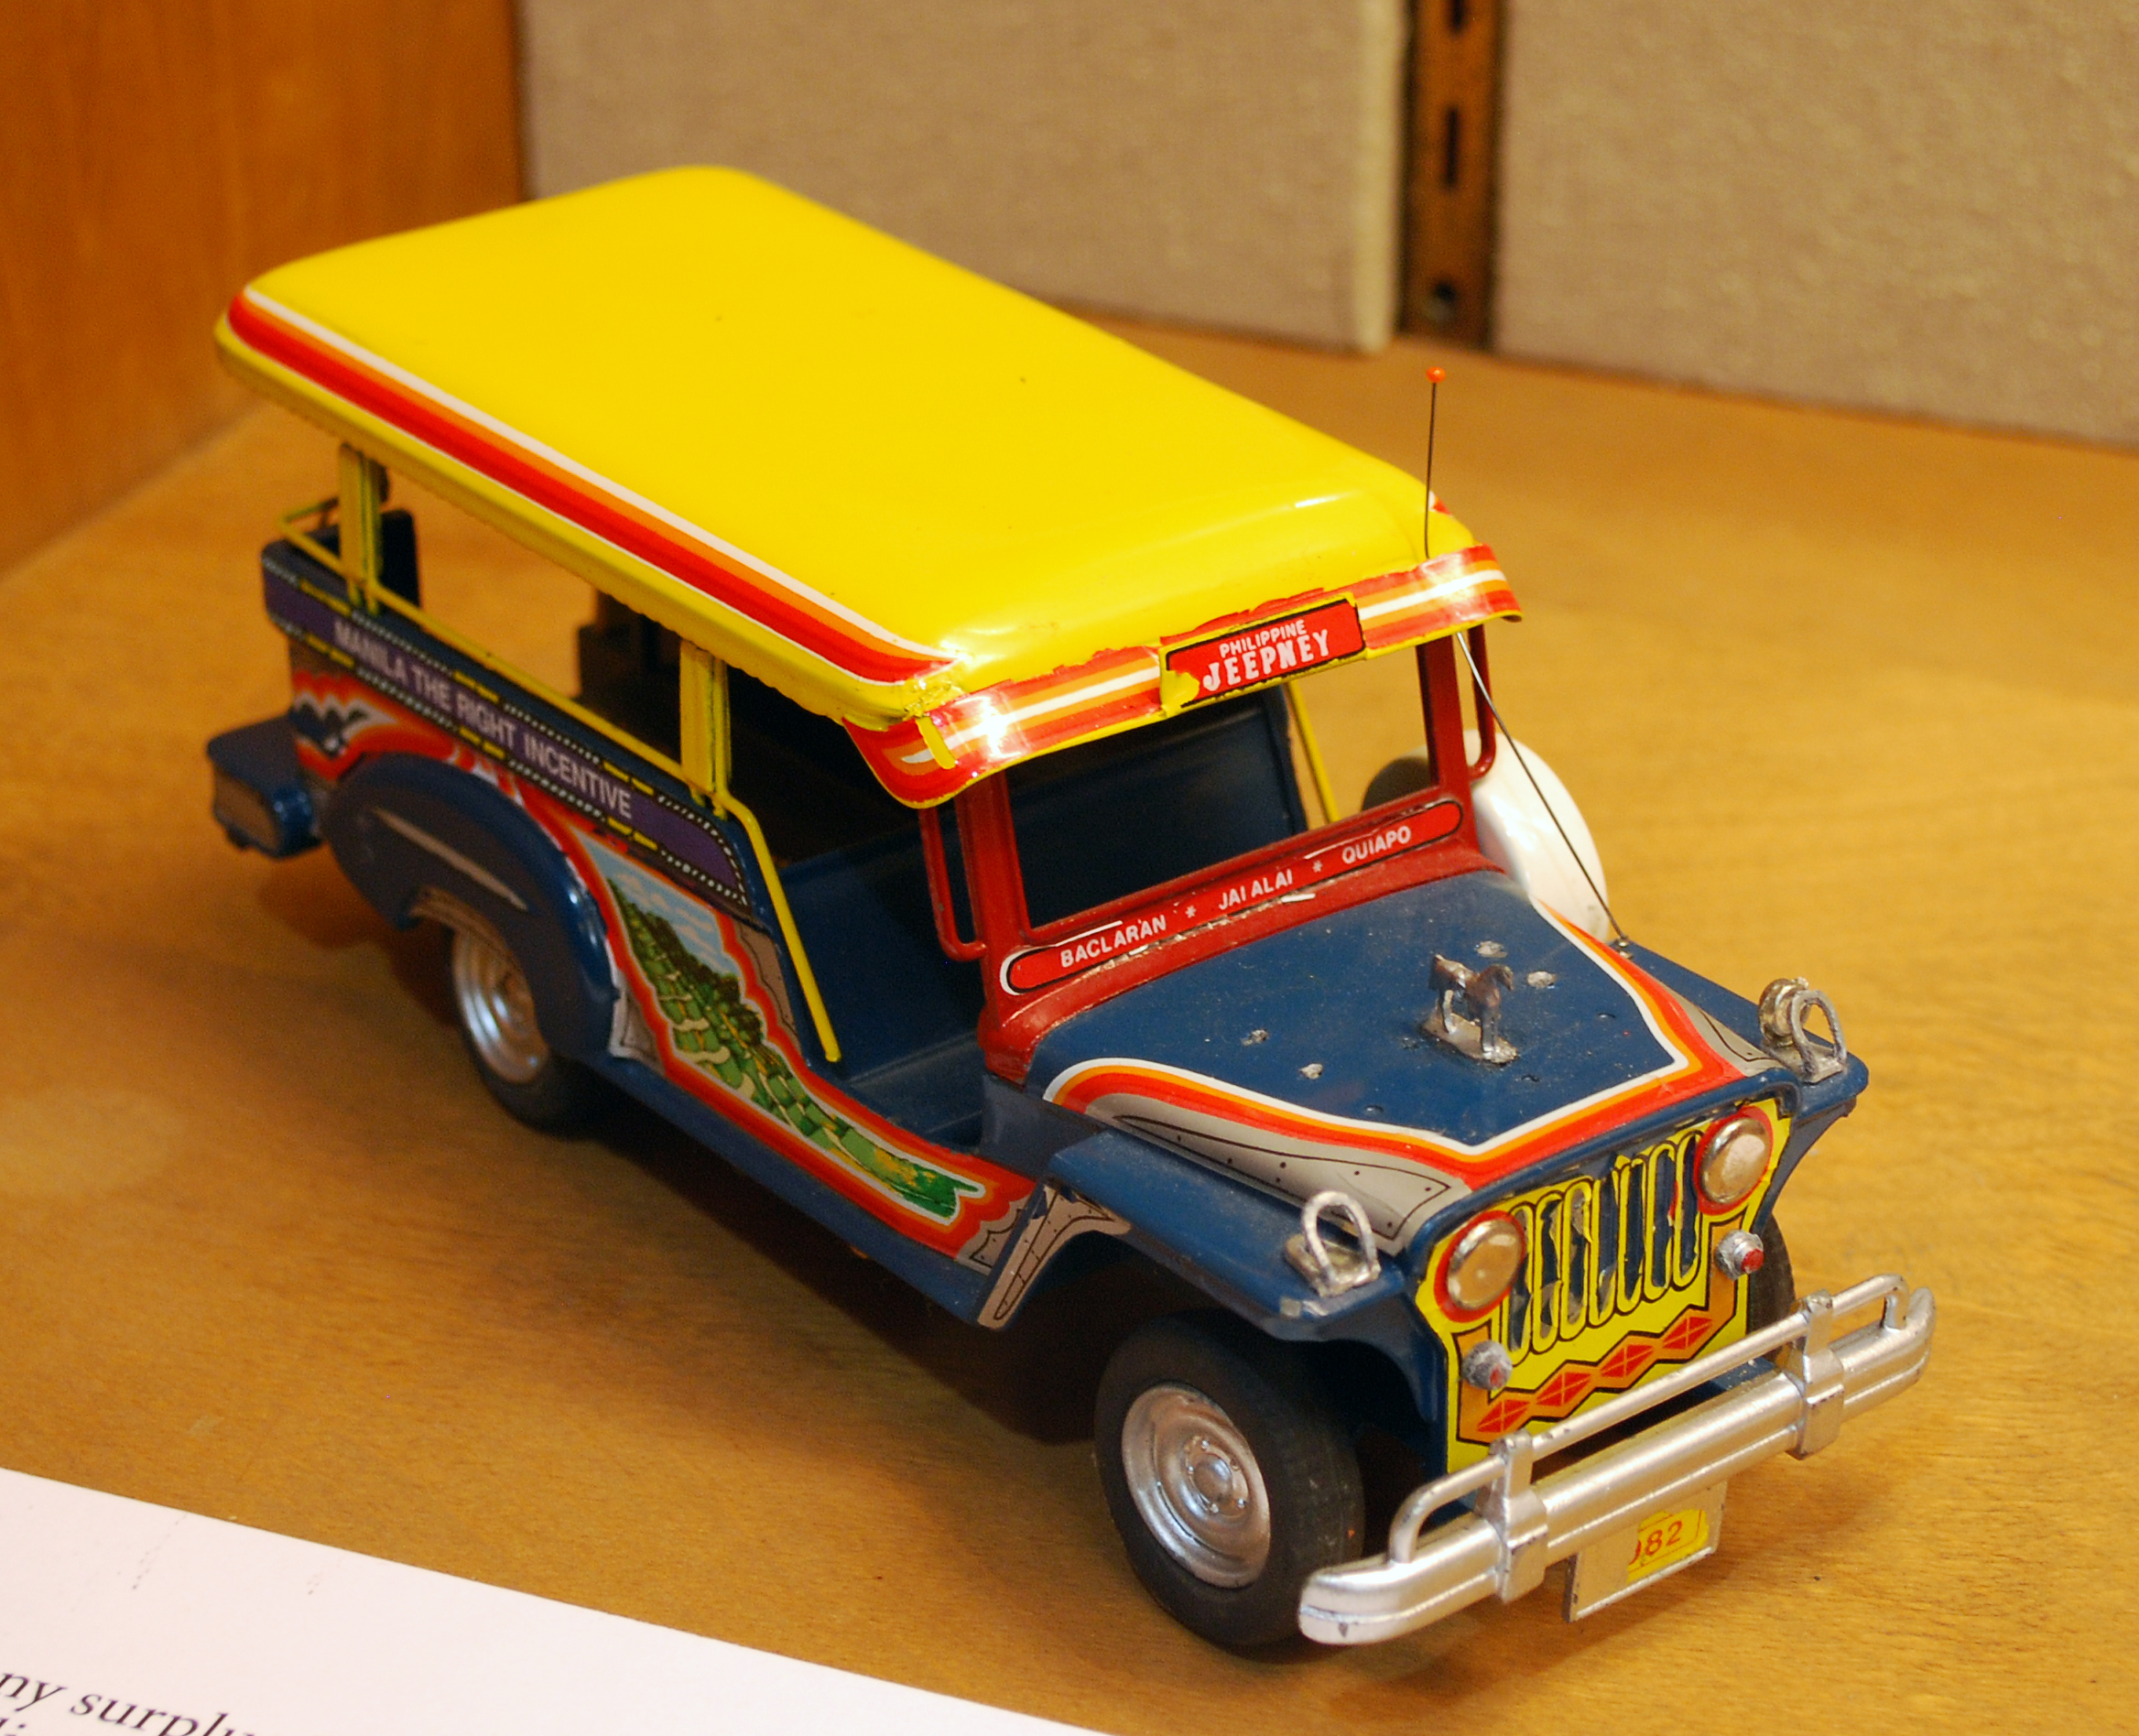 Object Toy (Filipino Jeepney Bus) UTSA Institute Of Texan Cultures